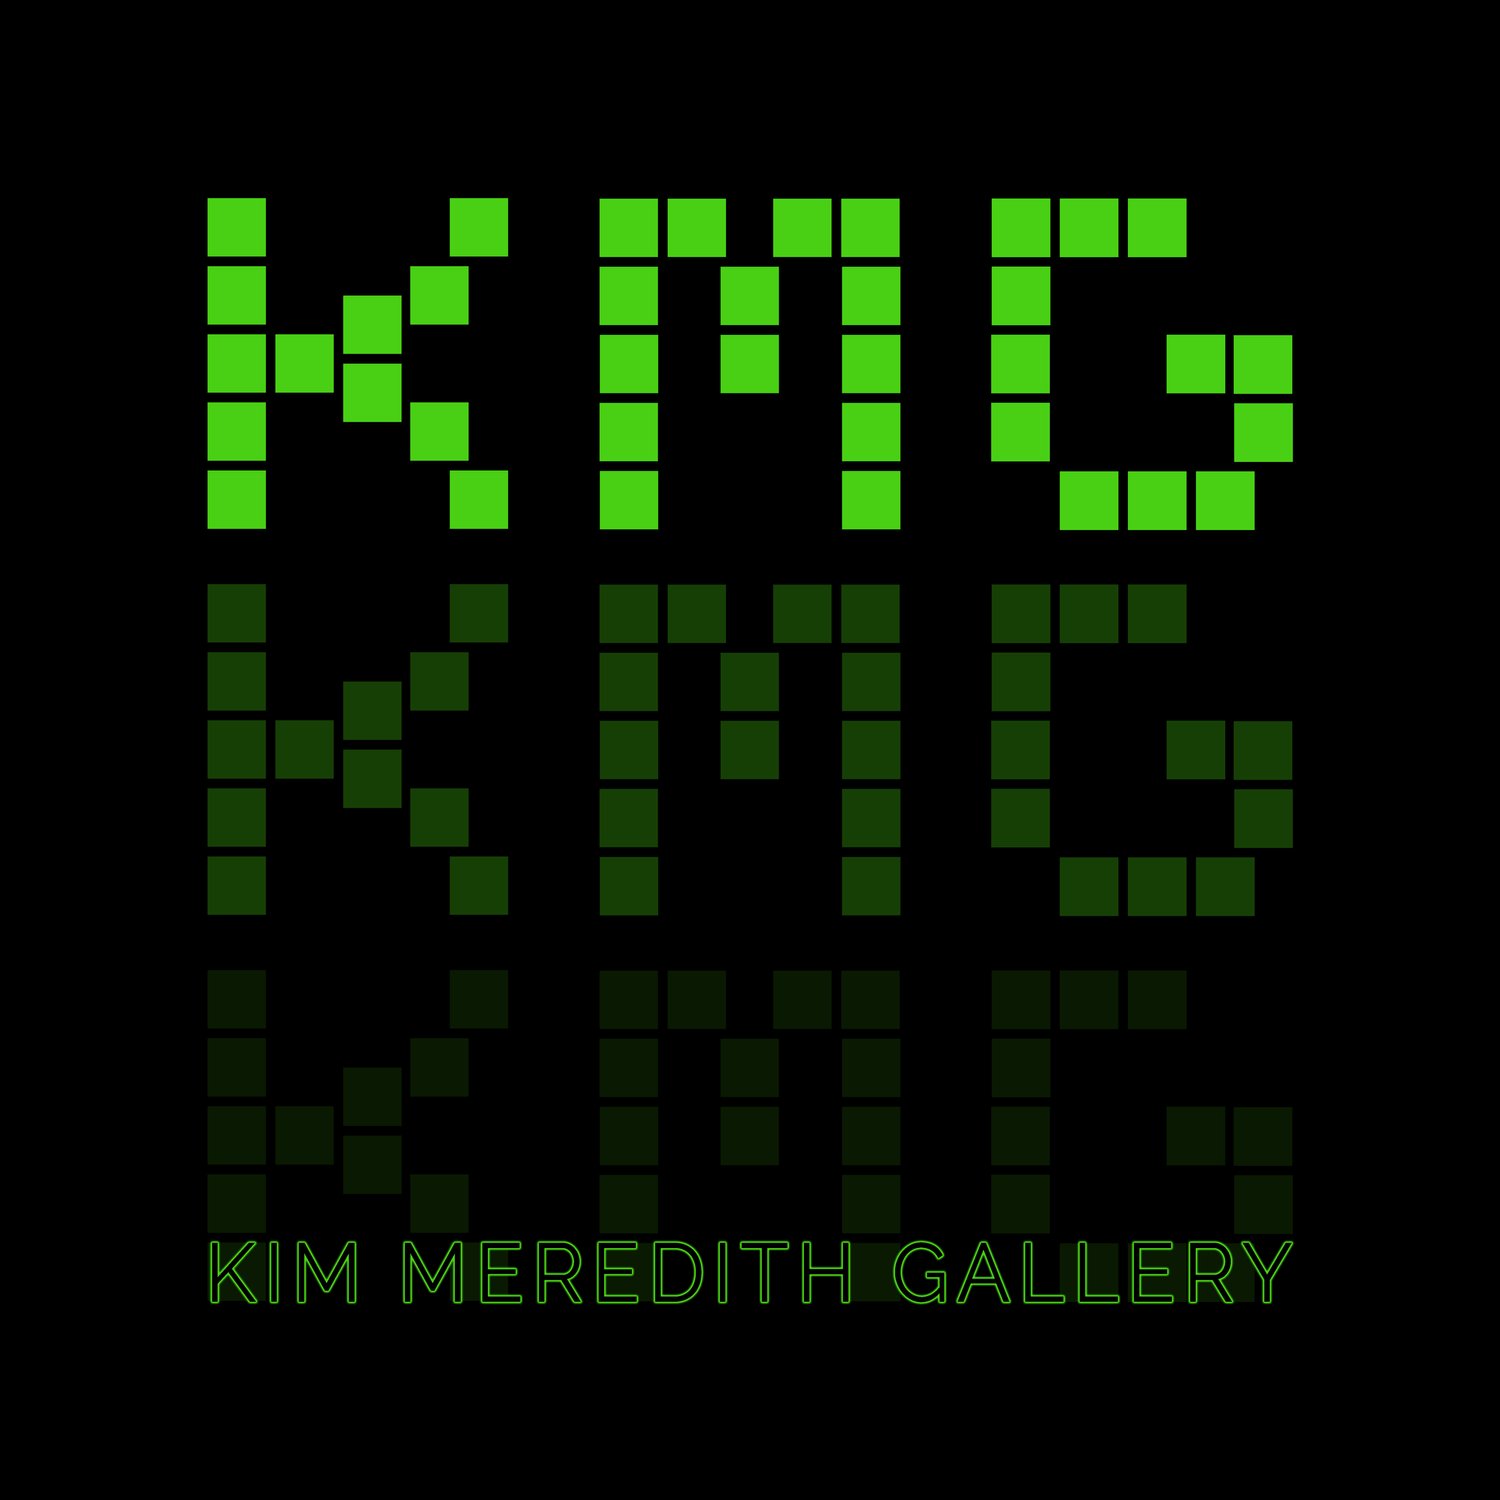 Kim Meredith Gallery